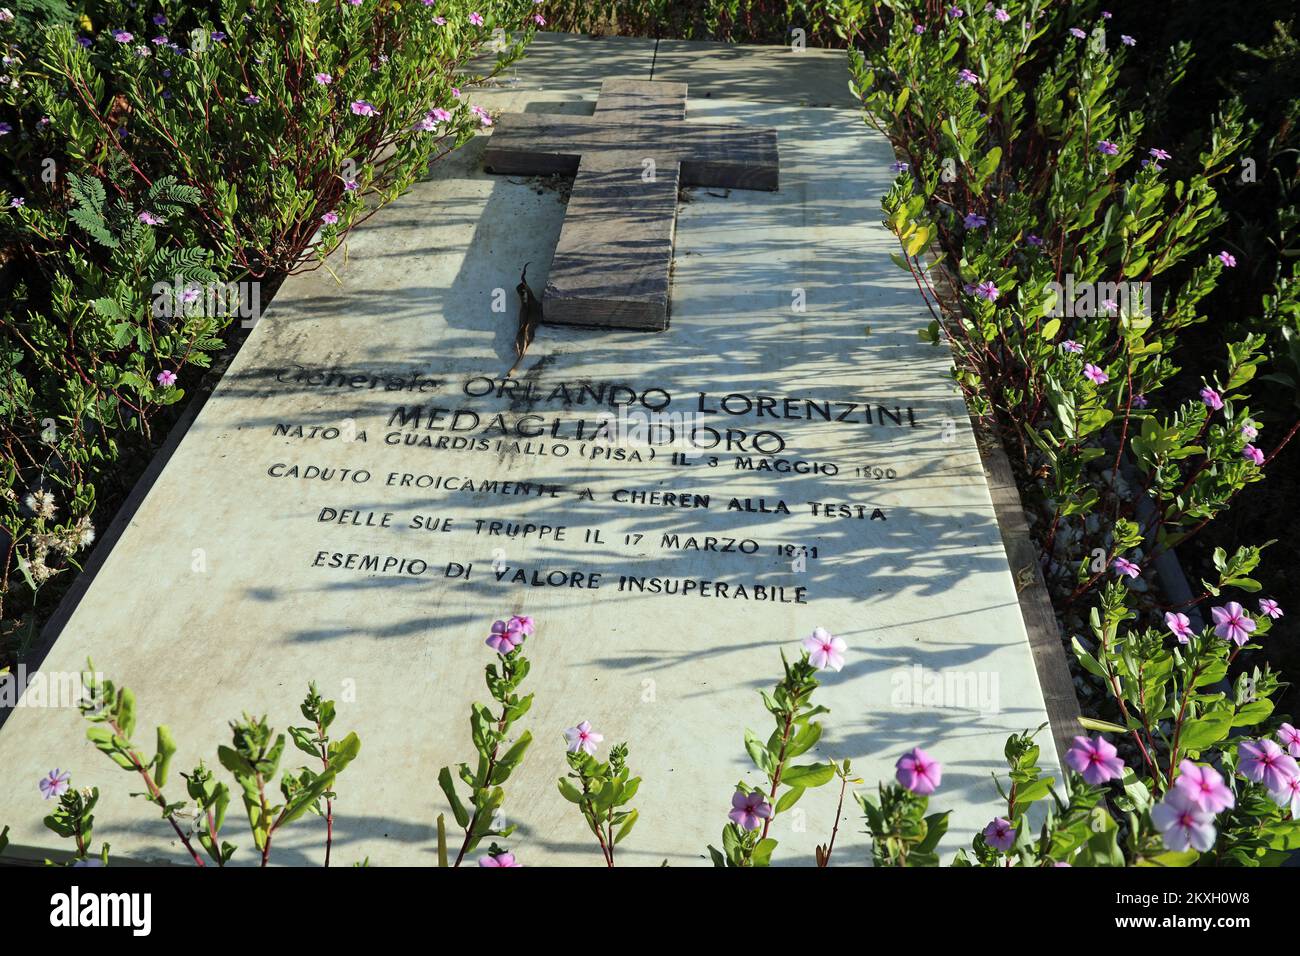 Tomb of Orlando Lorenzini at Keren War Cemetery in Eritrea Stock Photo